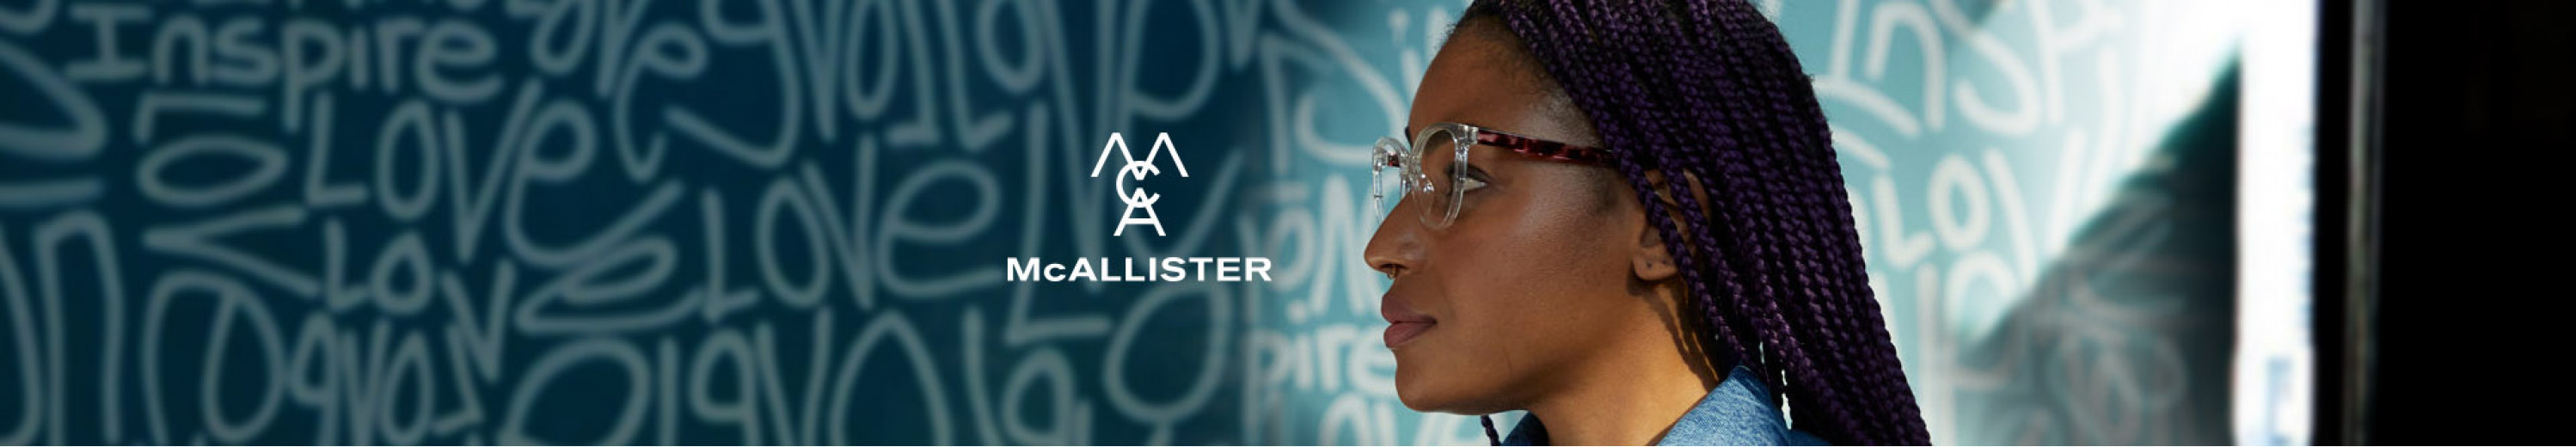 McAllister Eyeglasses